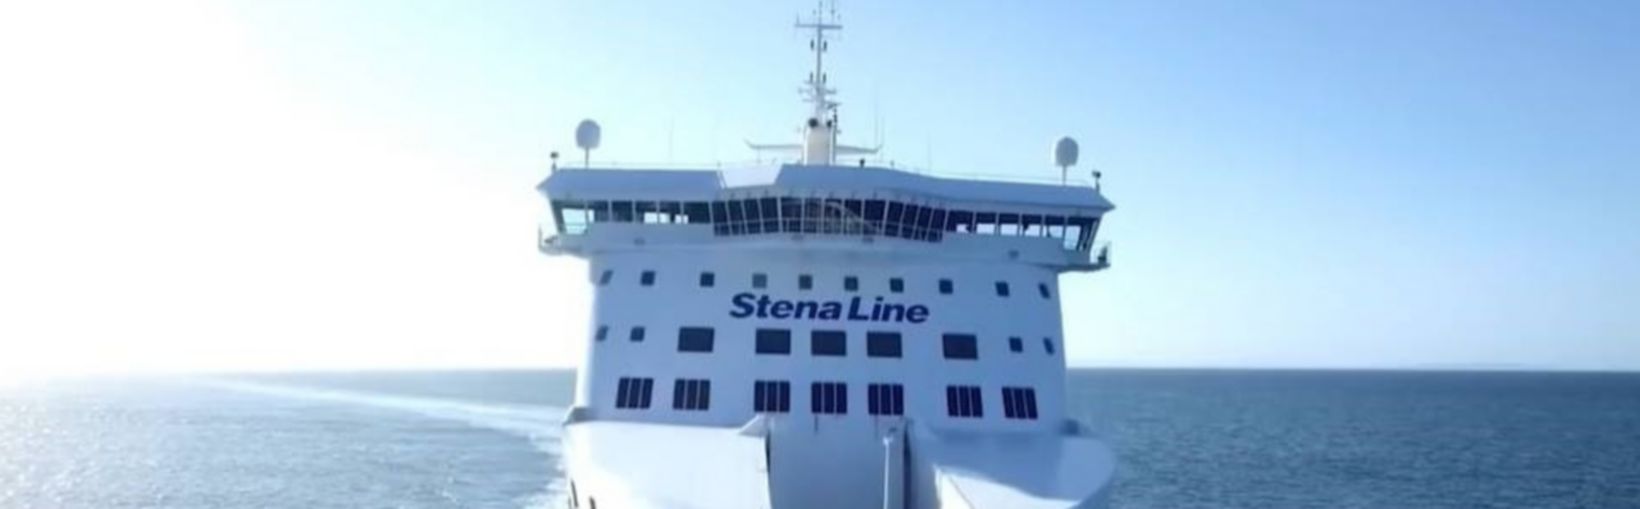 Stena Superfast VIII ferry at sea